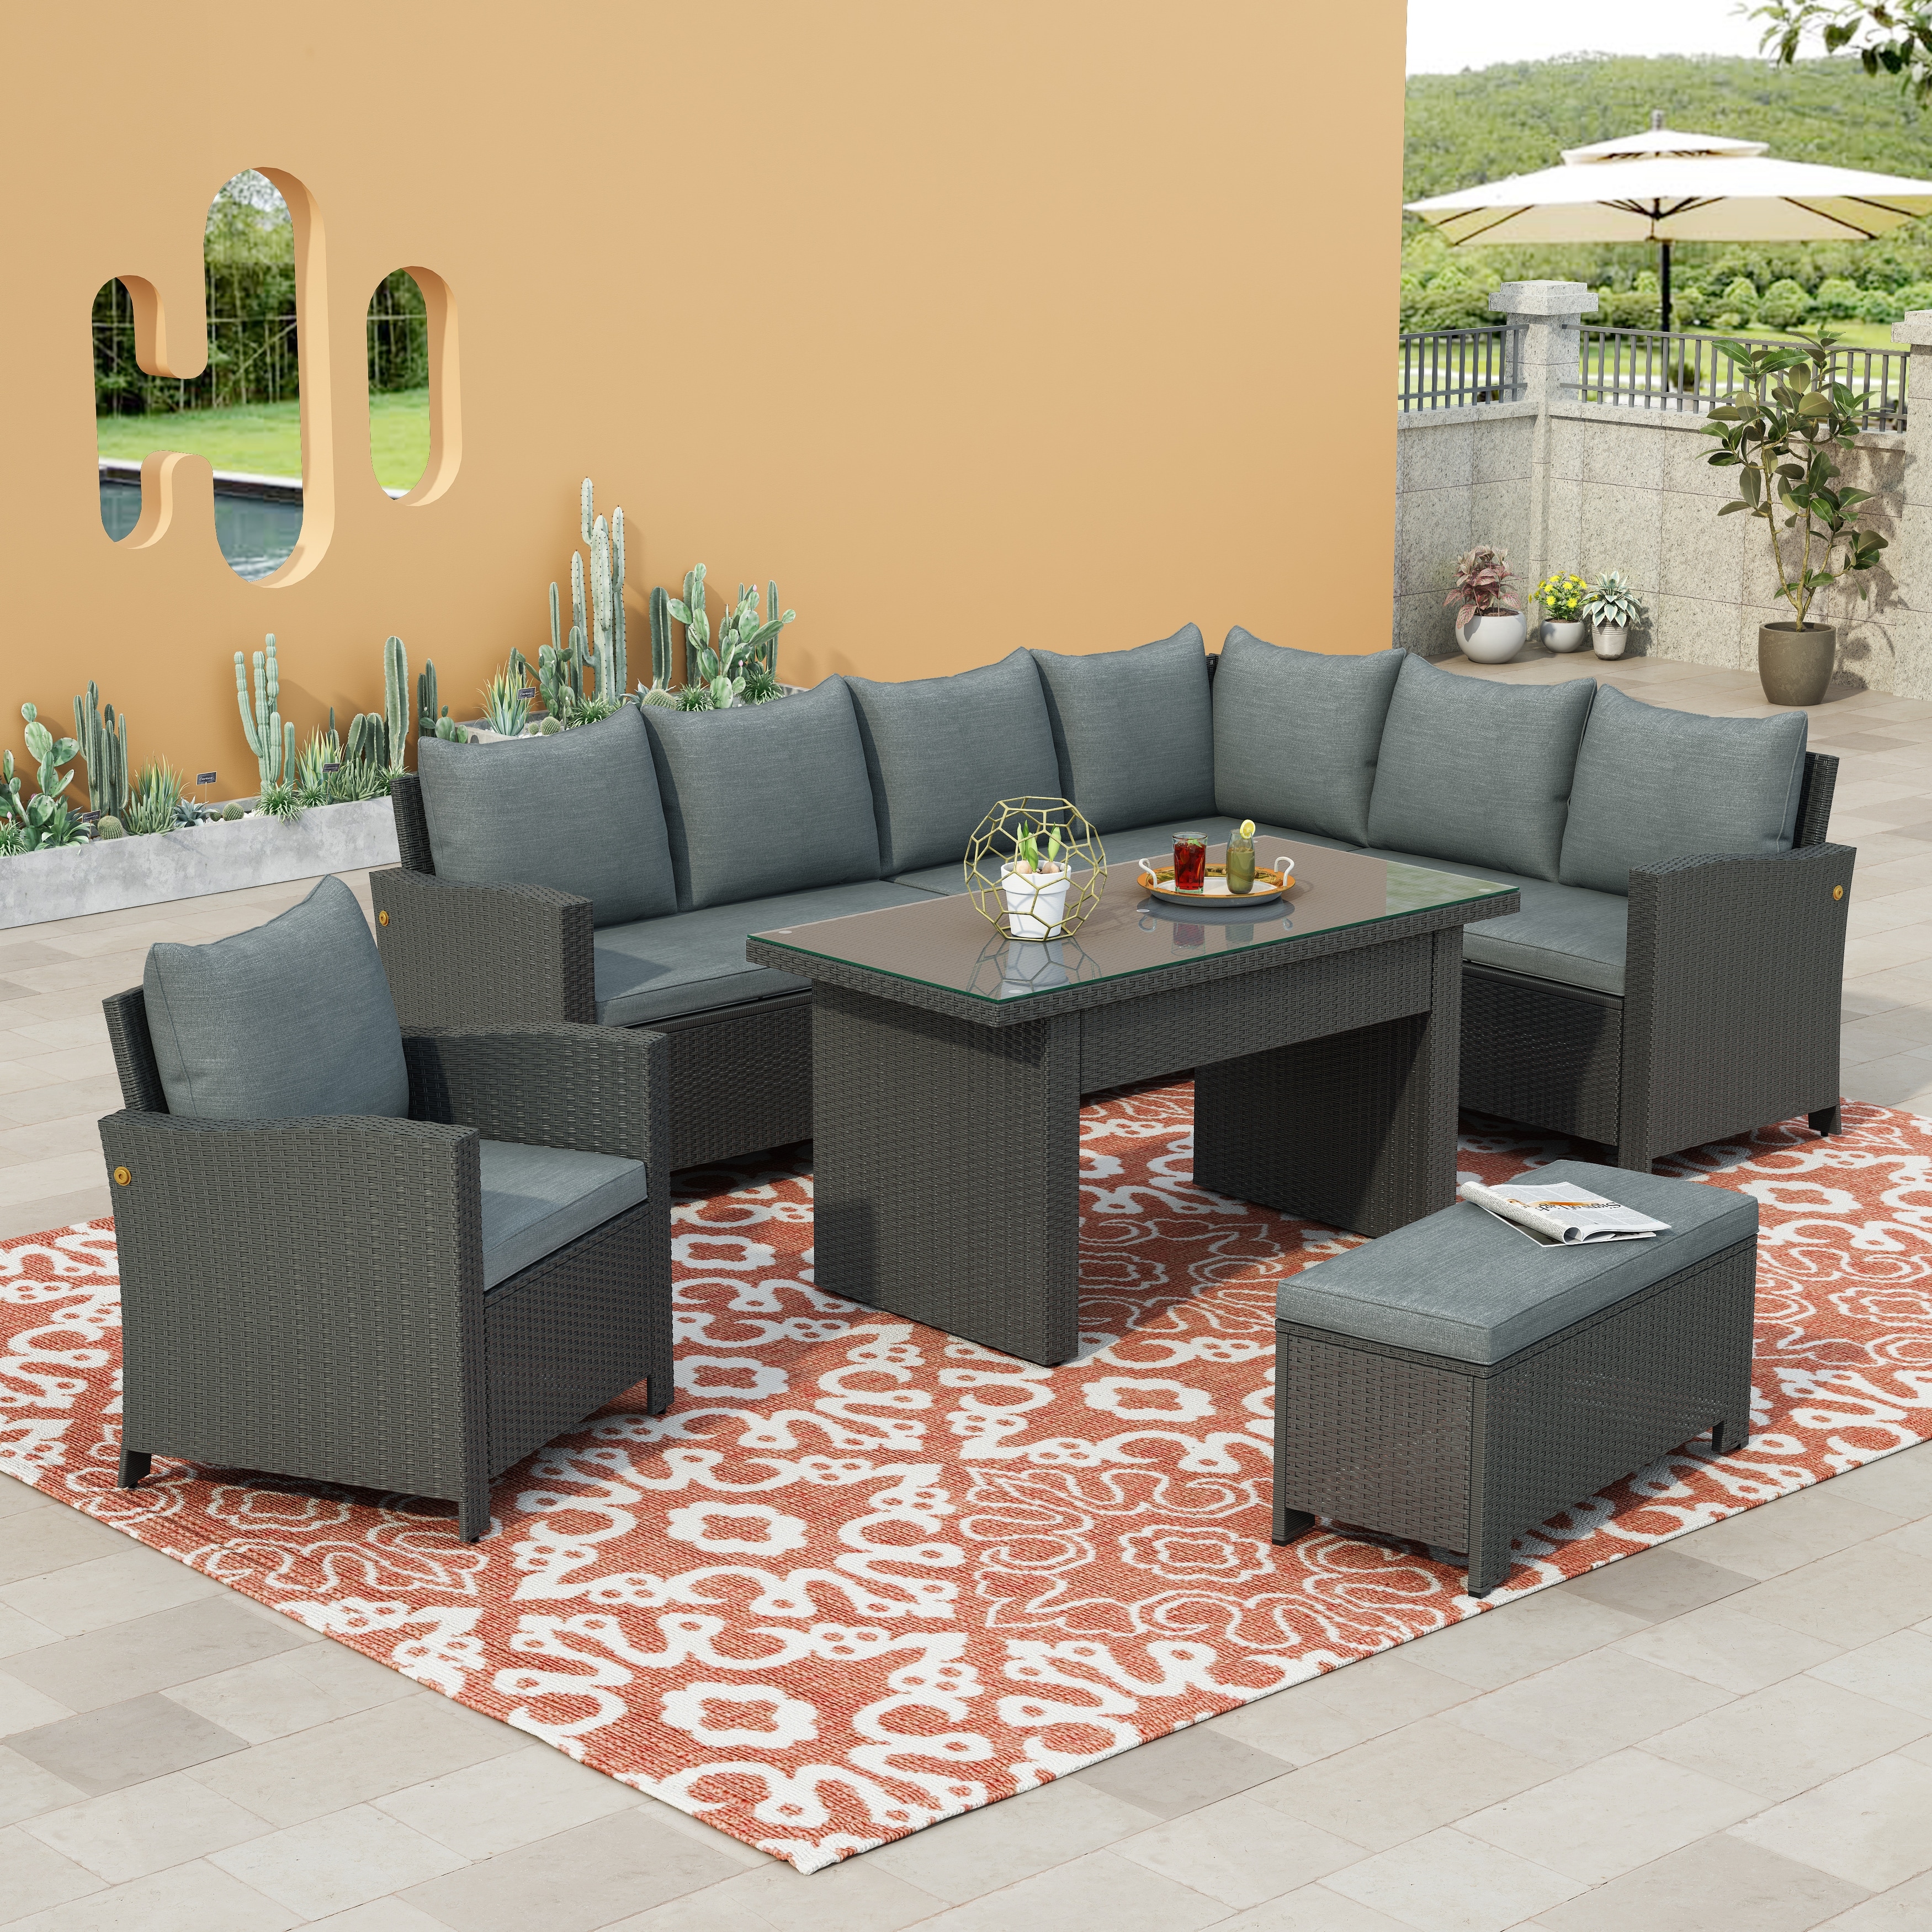 6 Piece Outdoor Conversation Sofa Set